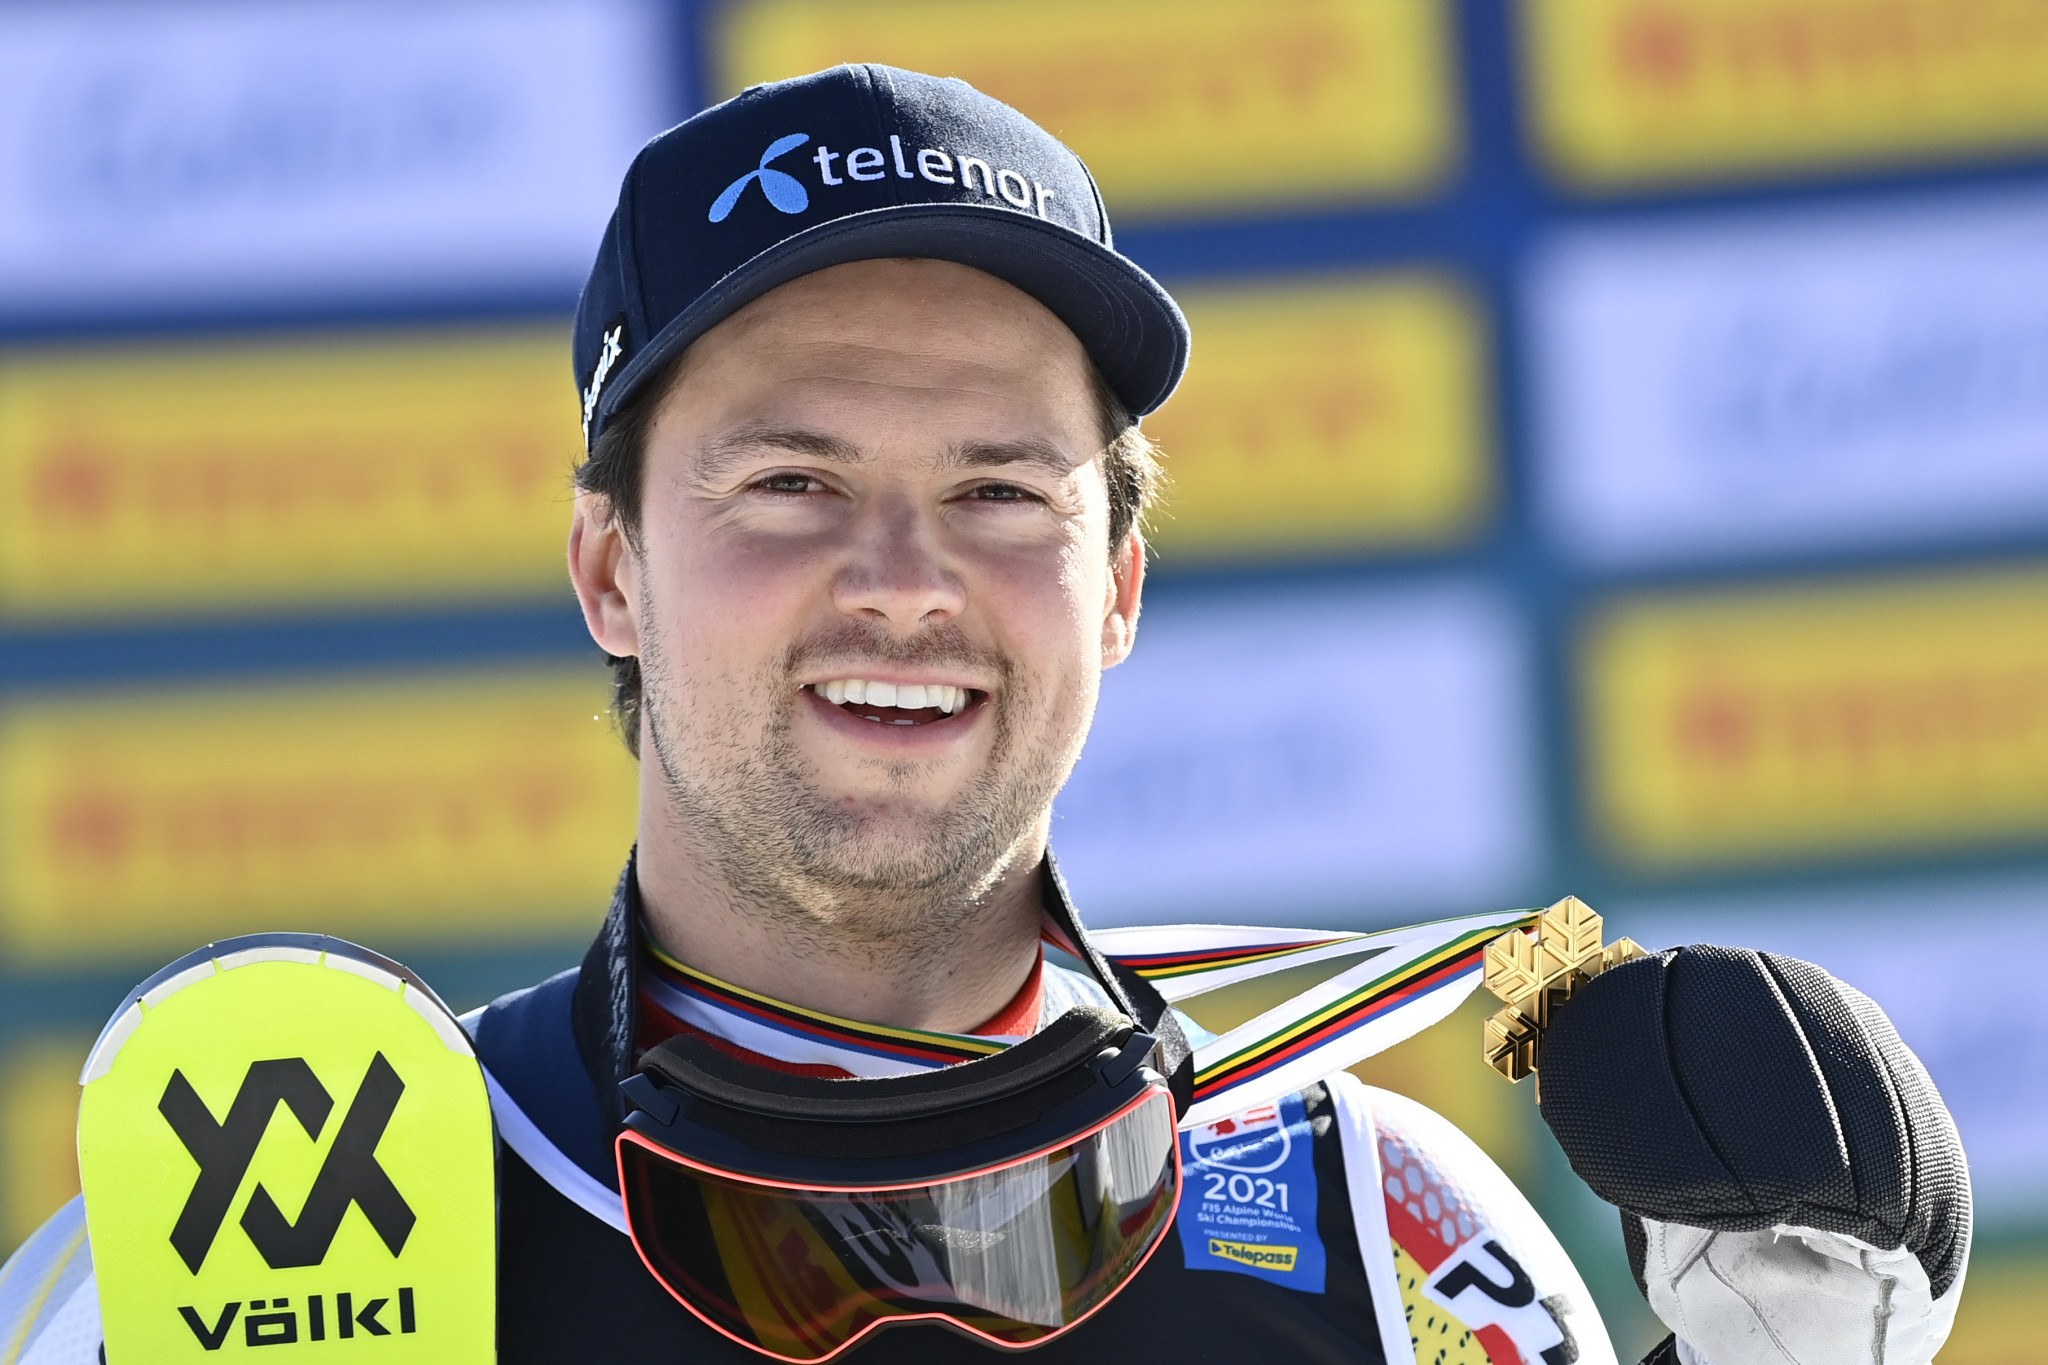 Foss-Solevåg wins slalom as FIS Alpine Ski World Championships conclude